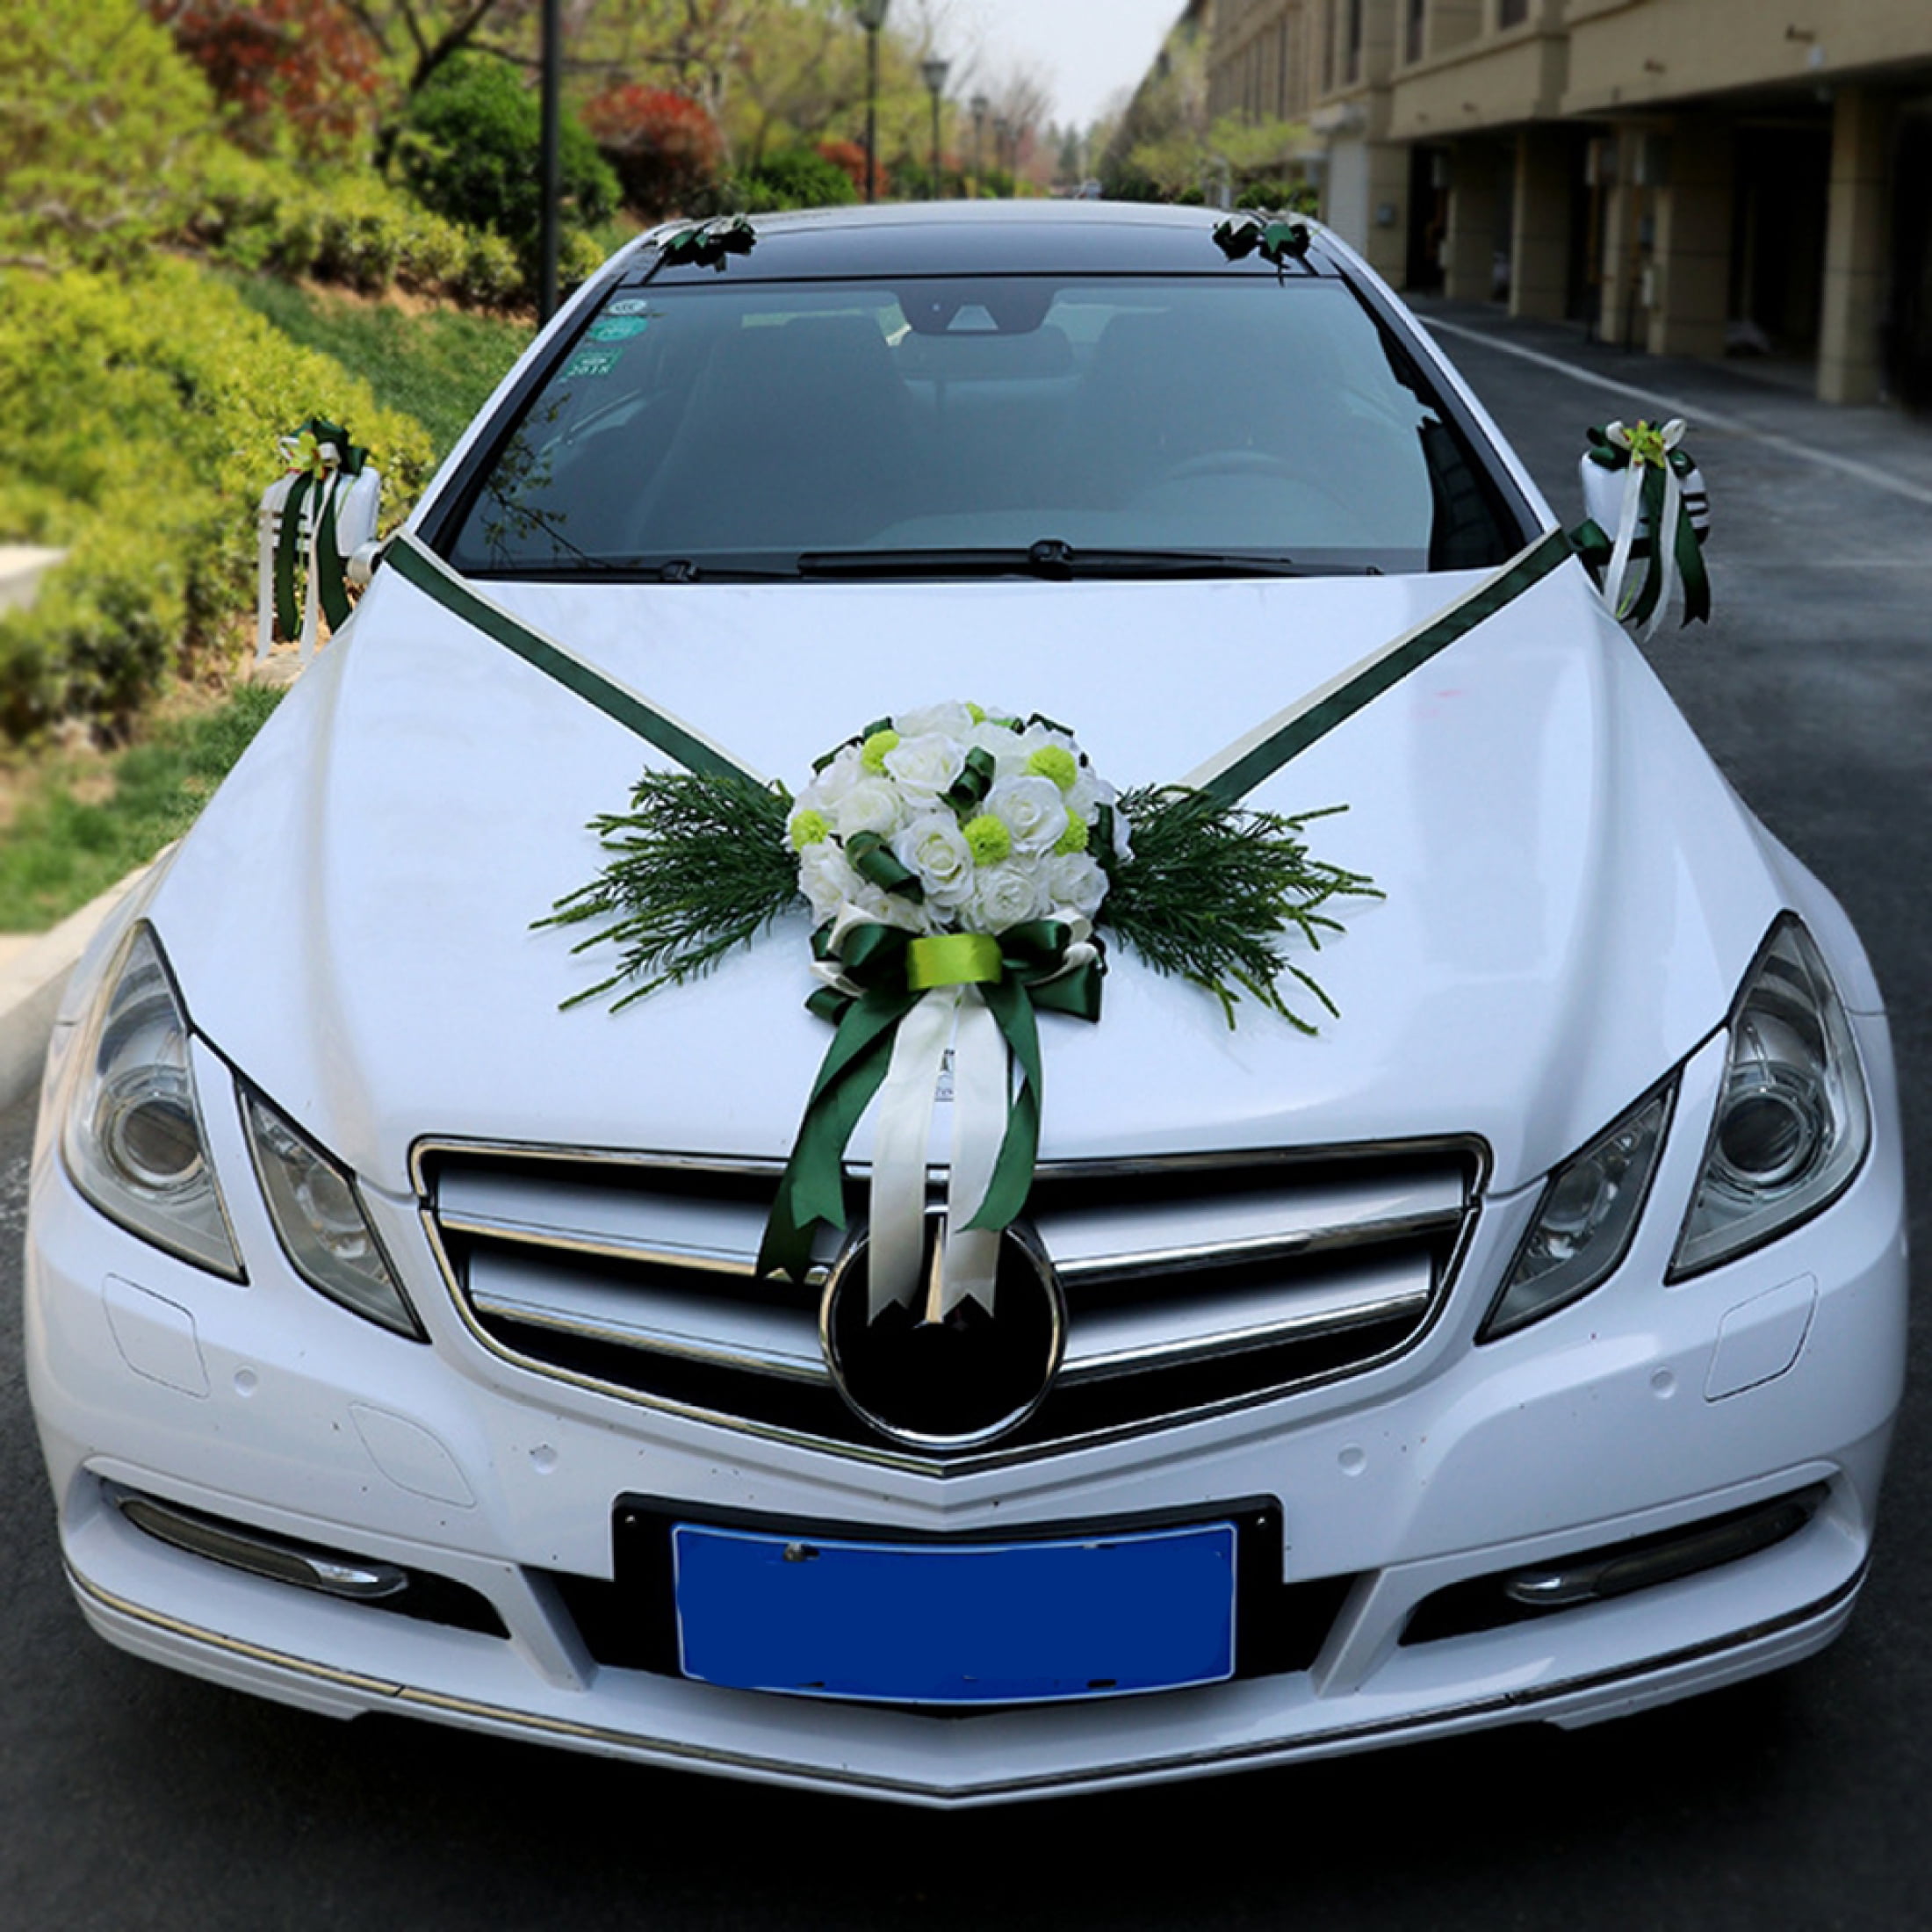  SEADEAR Wedding Car Front Flower Decoration European